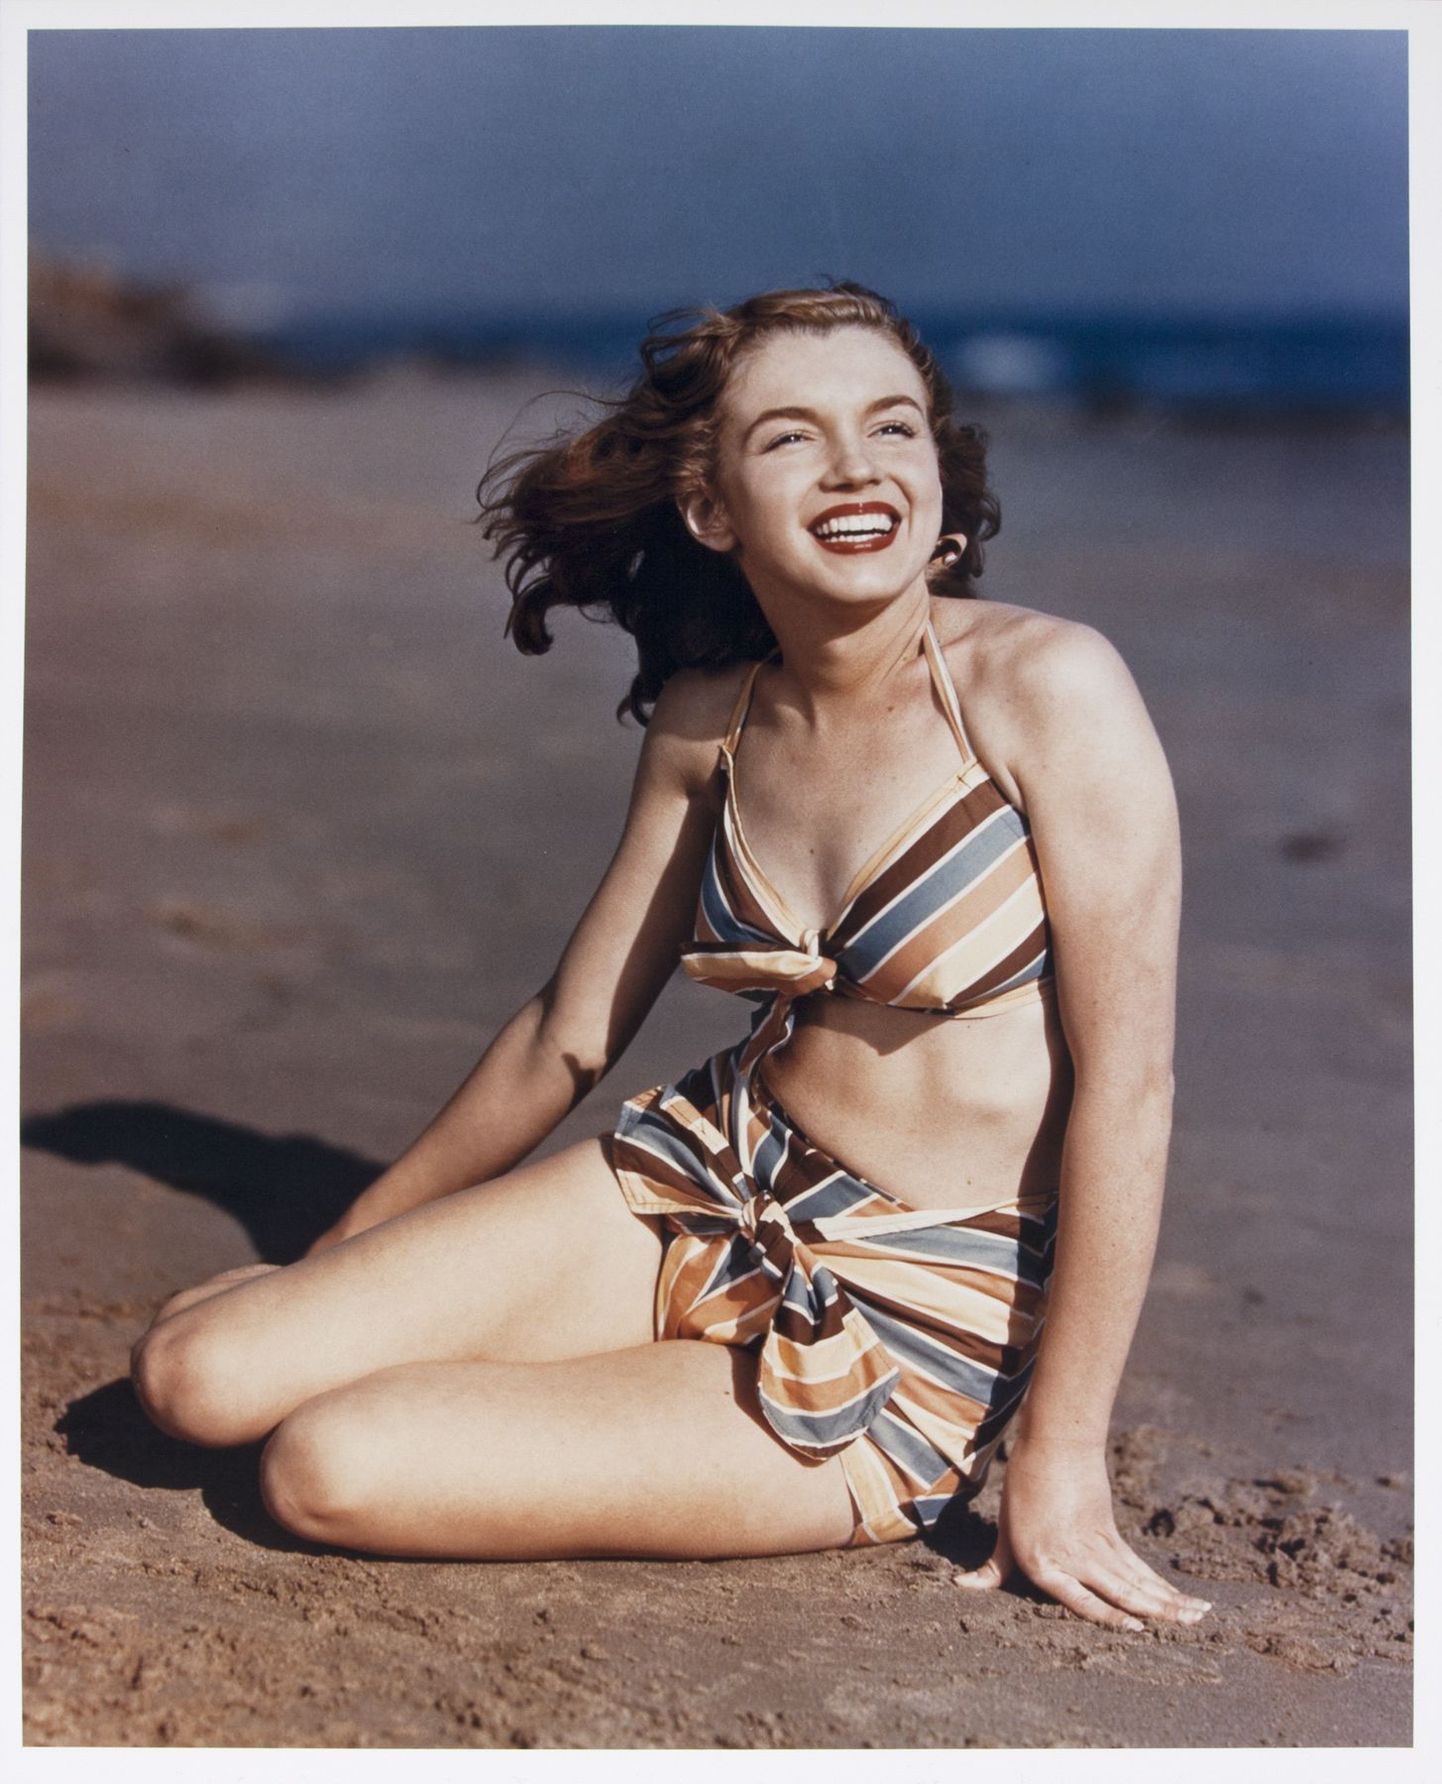 Norma Jean Dougherty (hiljem Marilyn Monroe) poseerib 1946. aastal bikiinides rannal.